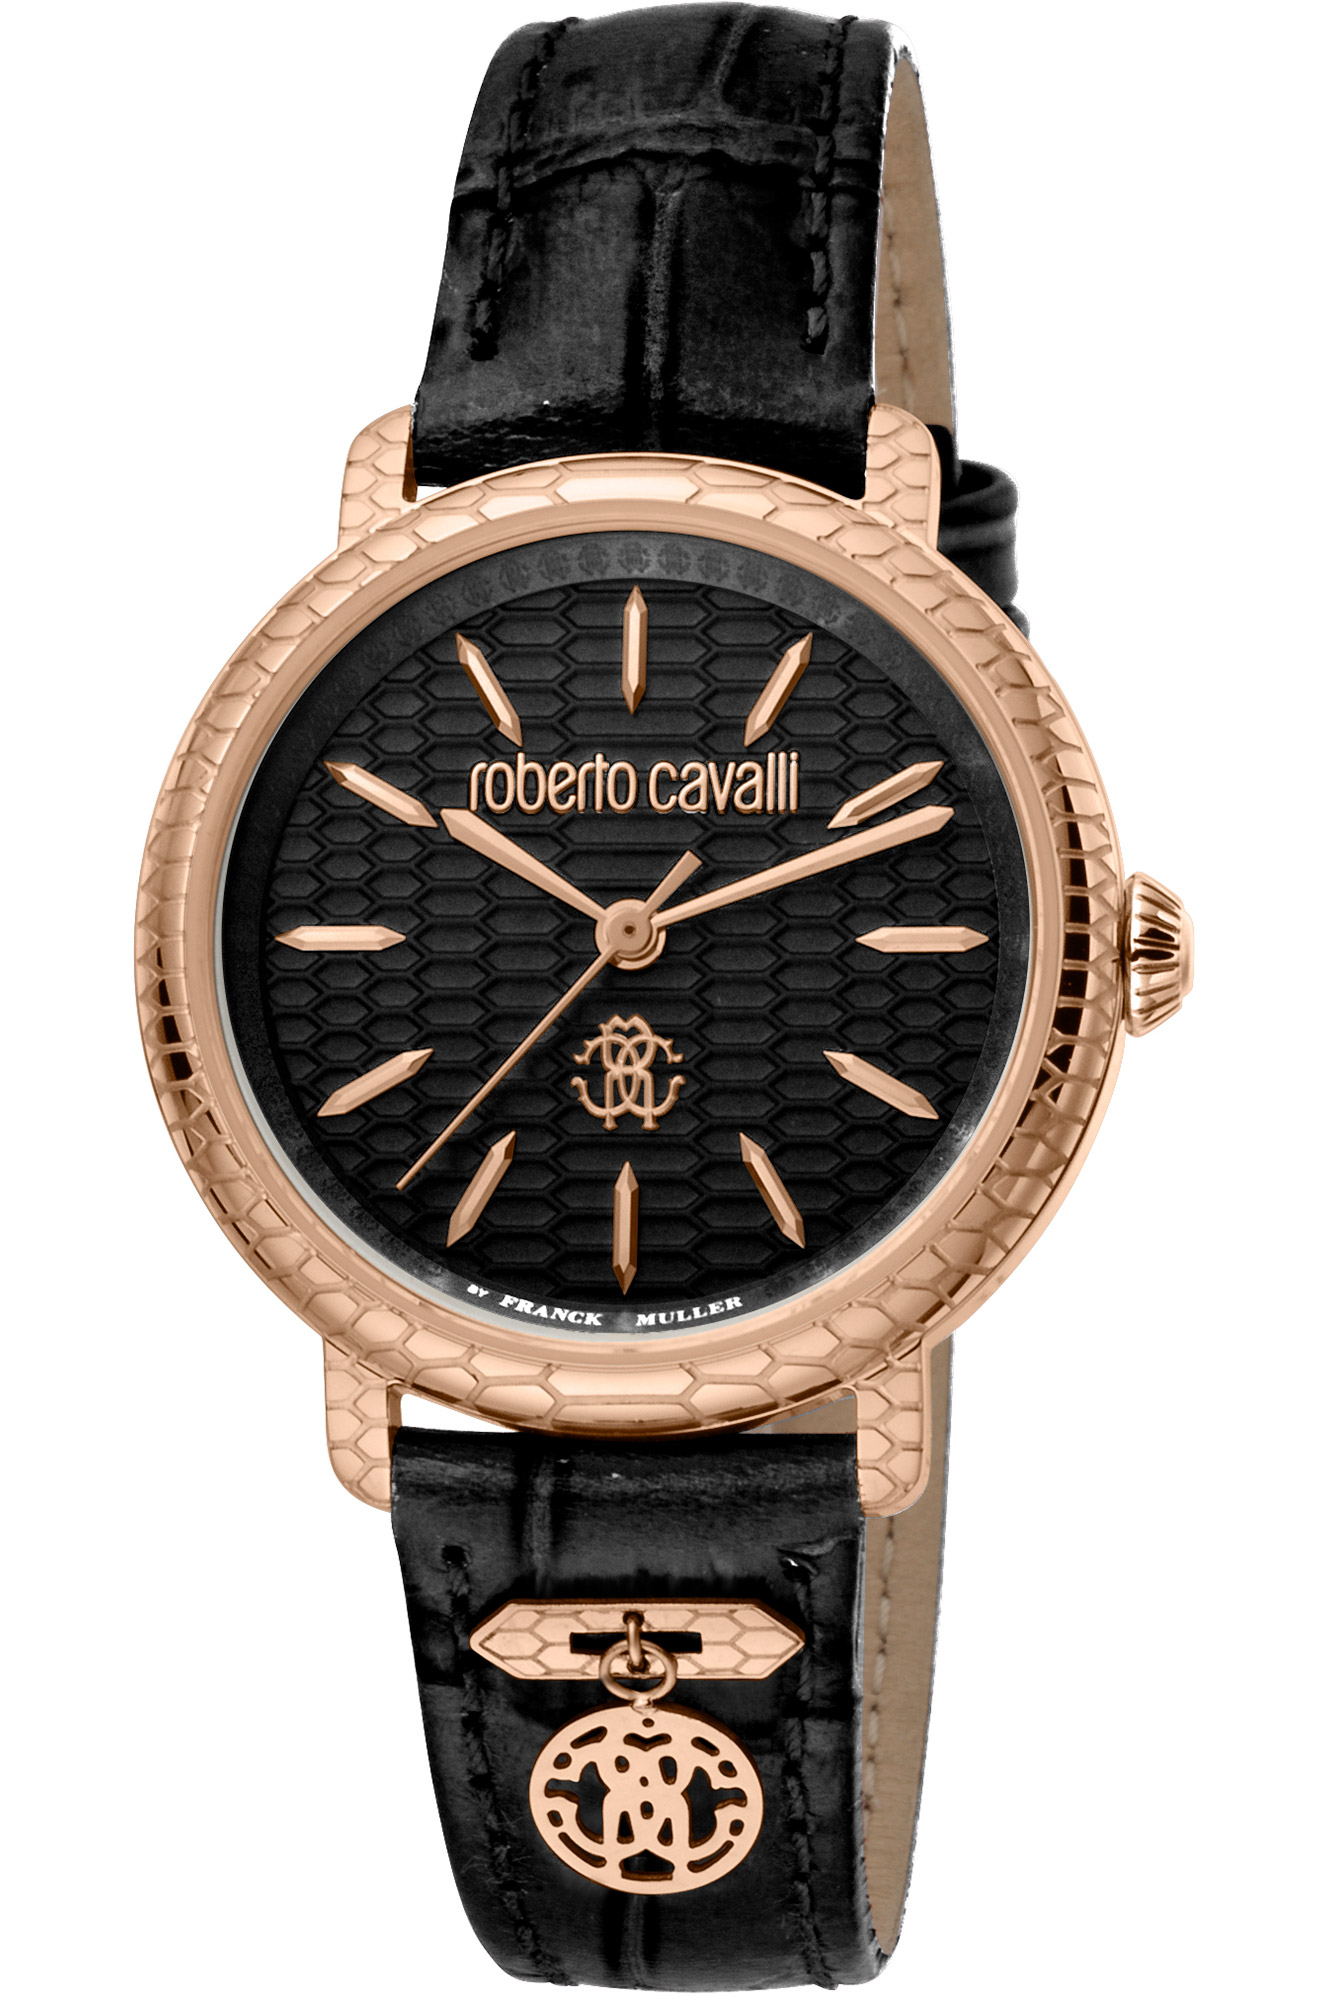 Watch Roberto Cavalli by Franck Muller rv1l098l0056